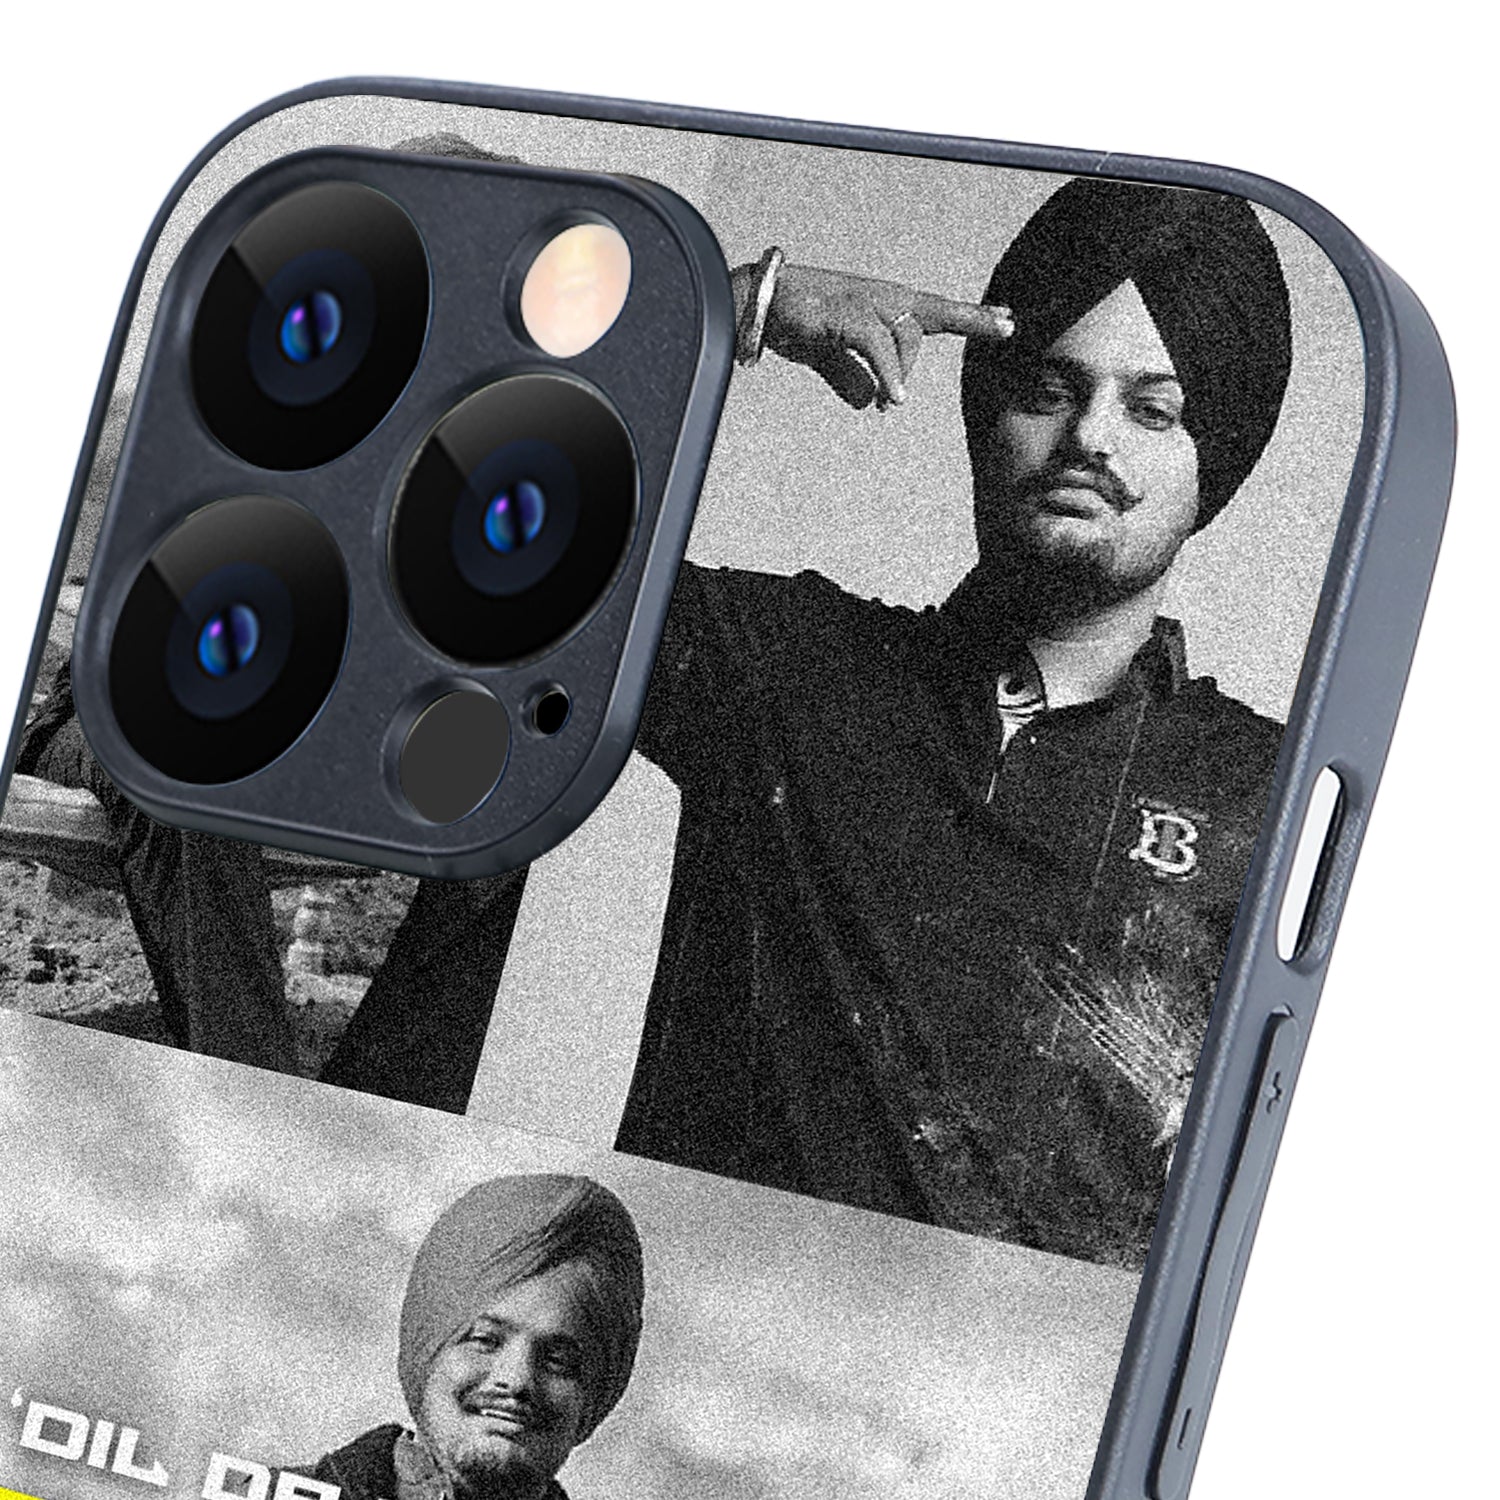 Tera Sidhu Moosewala iPhone 13 Pro Max Case